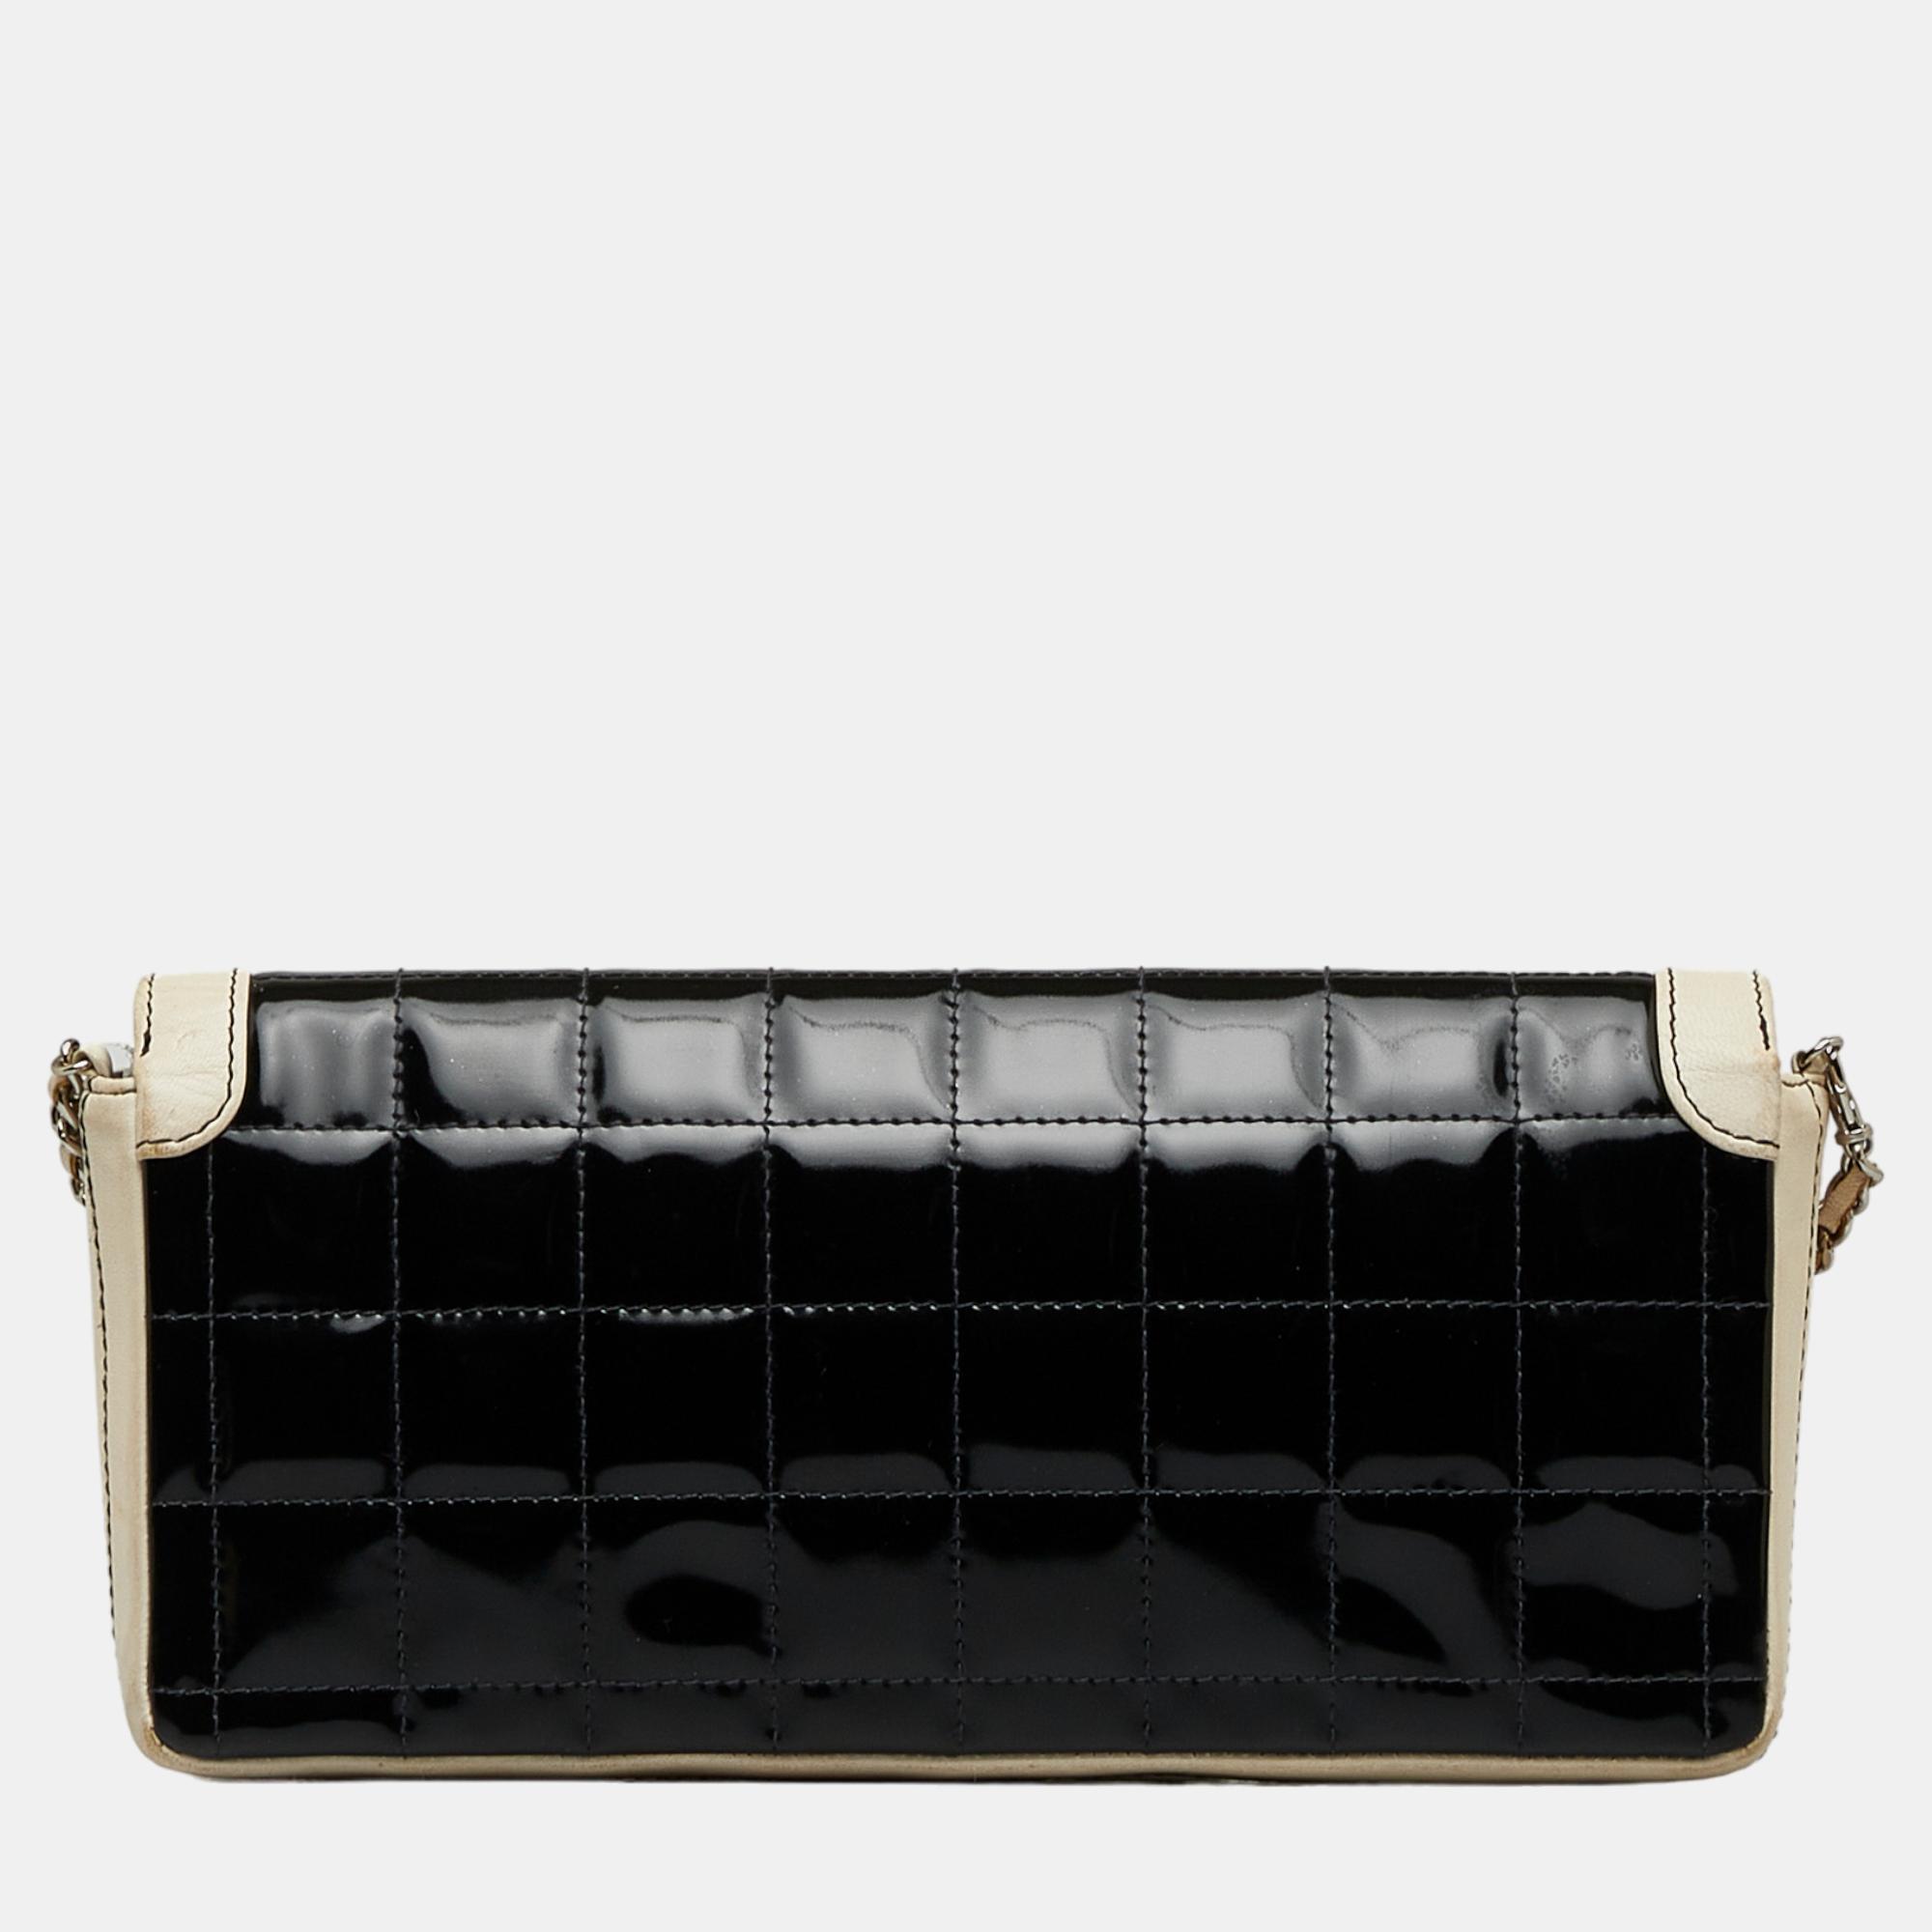 Chanel Bicolor Patent Chocolate Bar Flap